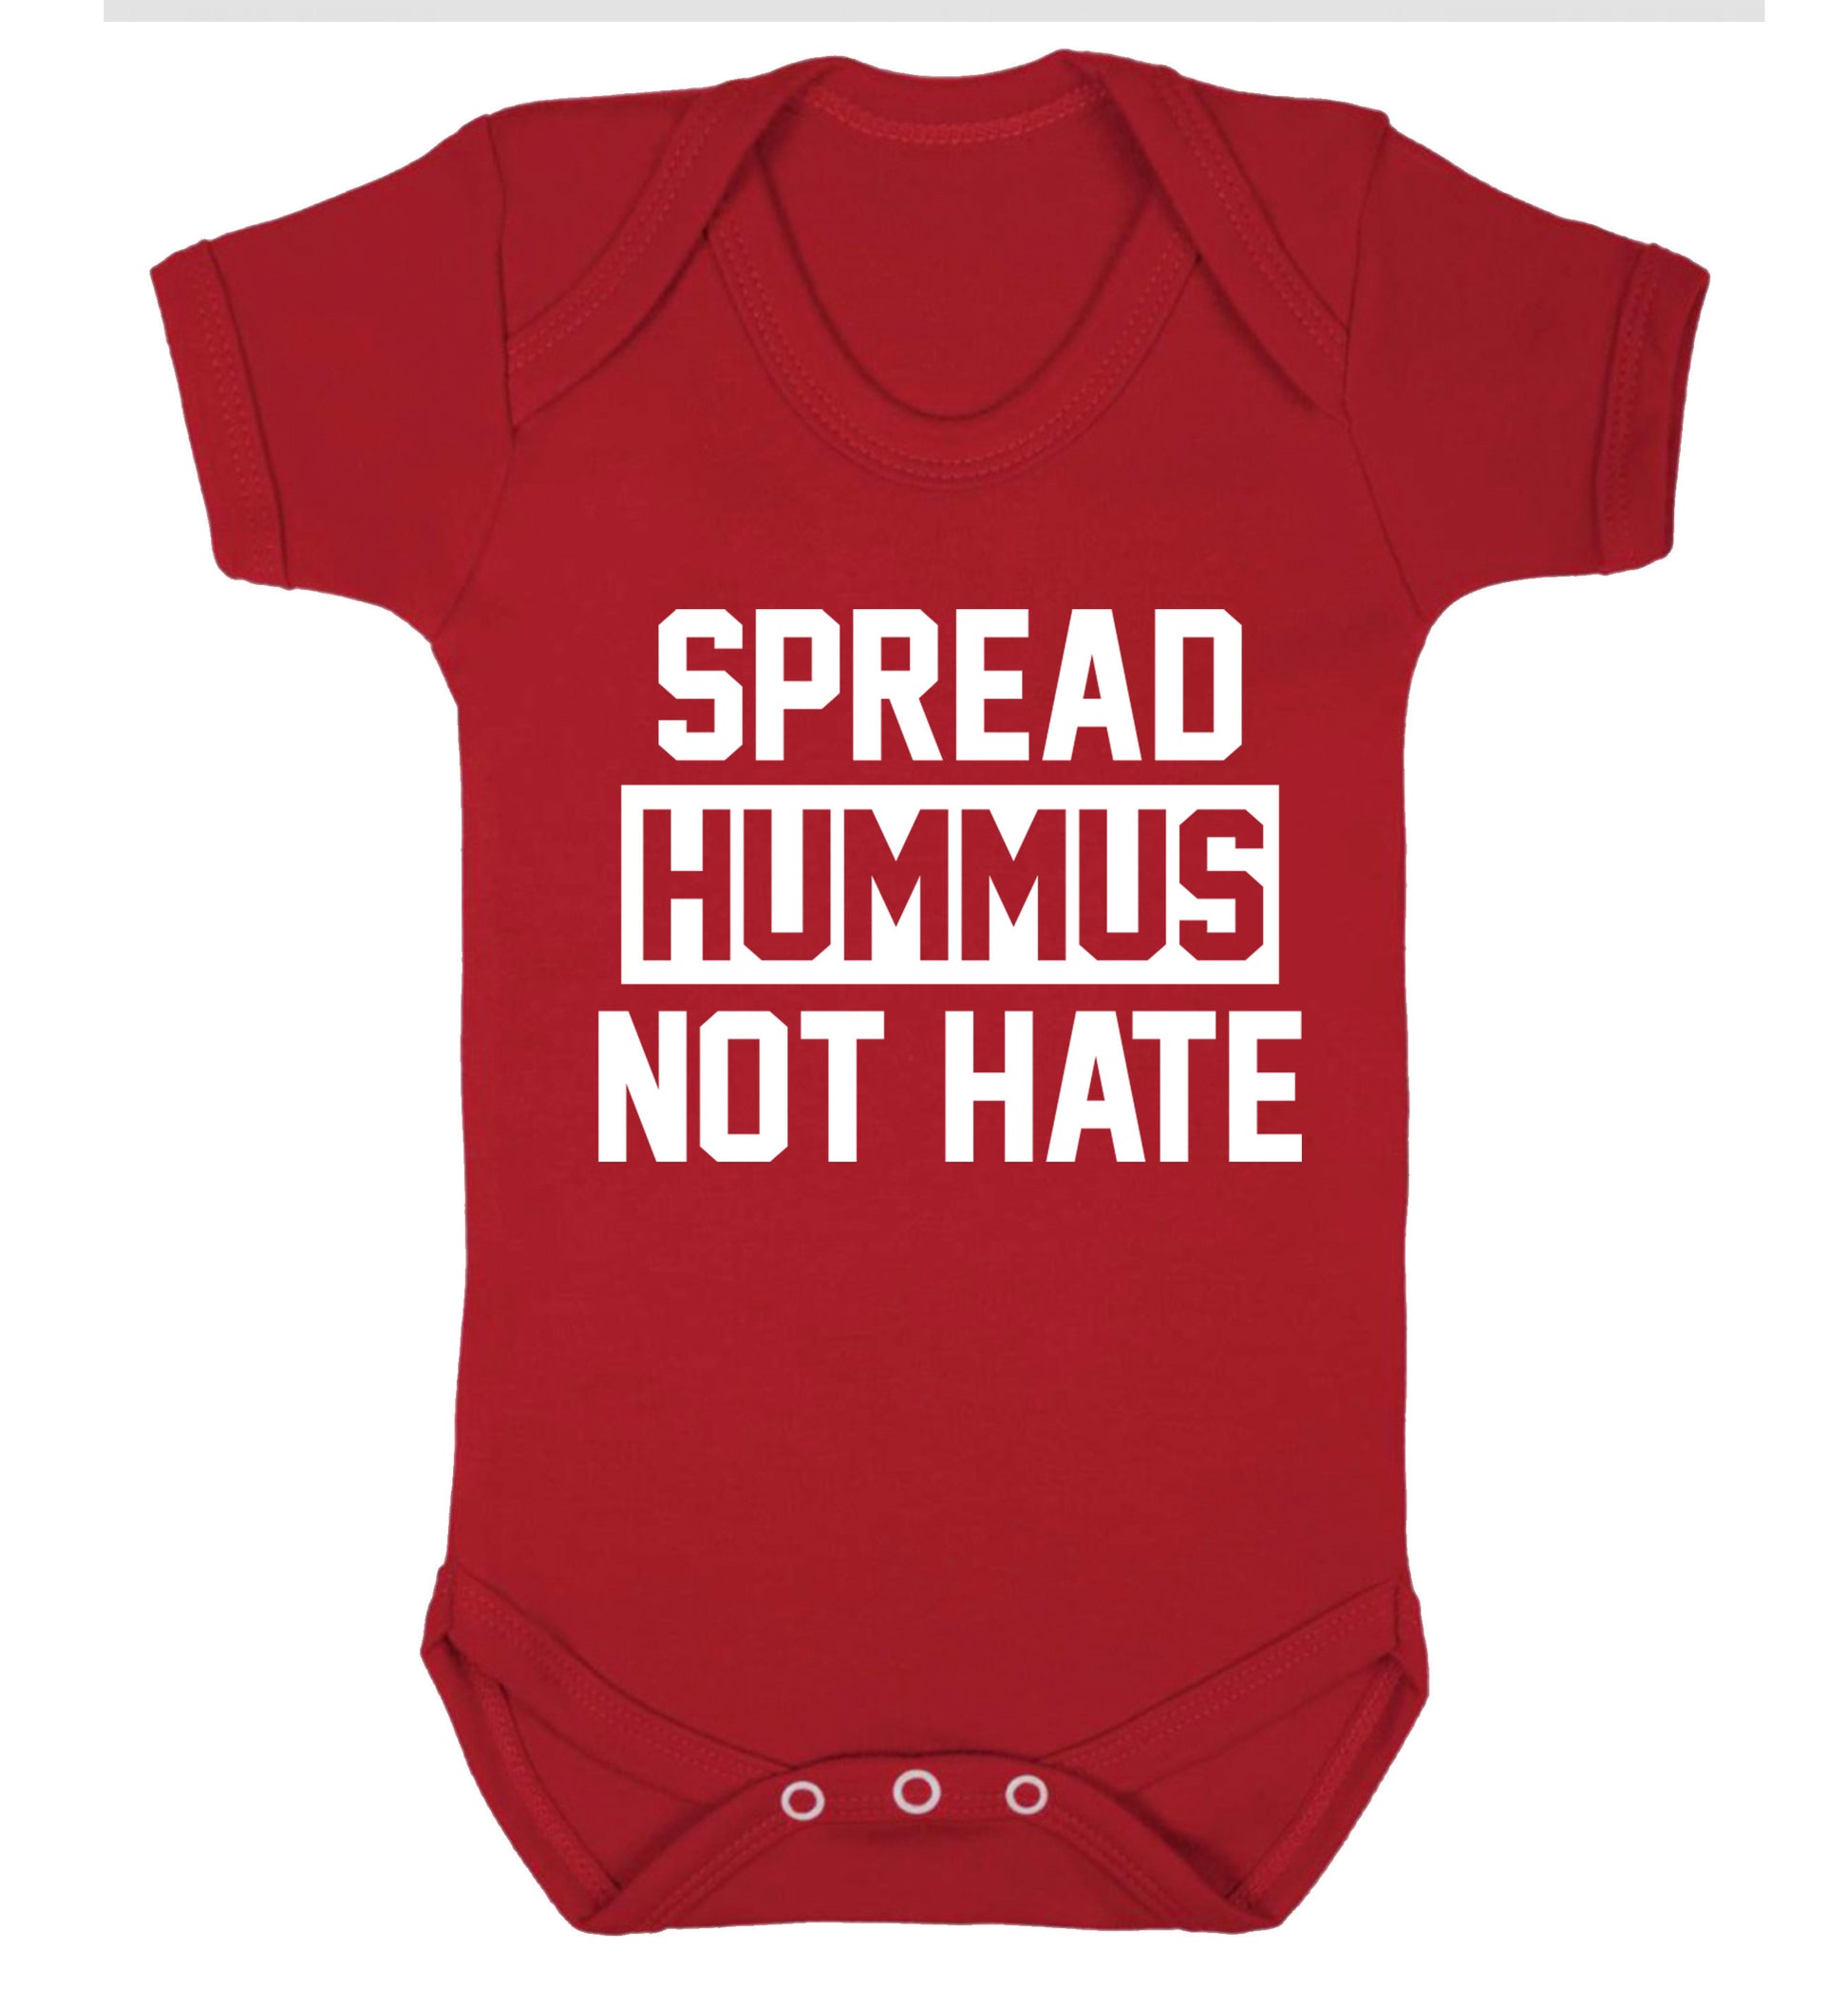 Spread hummus not hate Baby Vest red 18-24 months